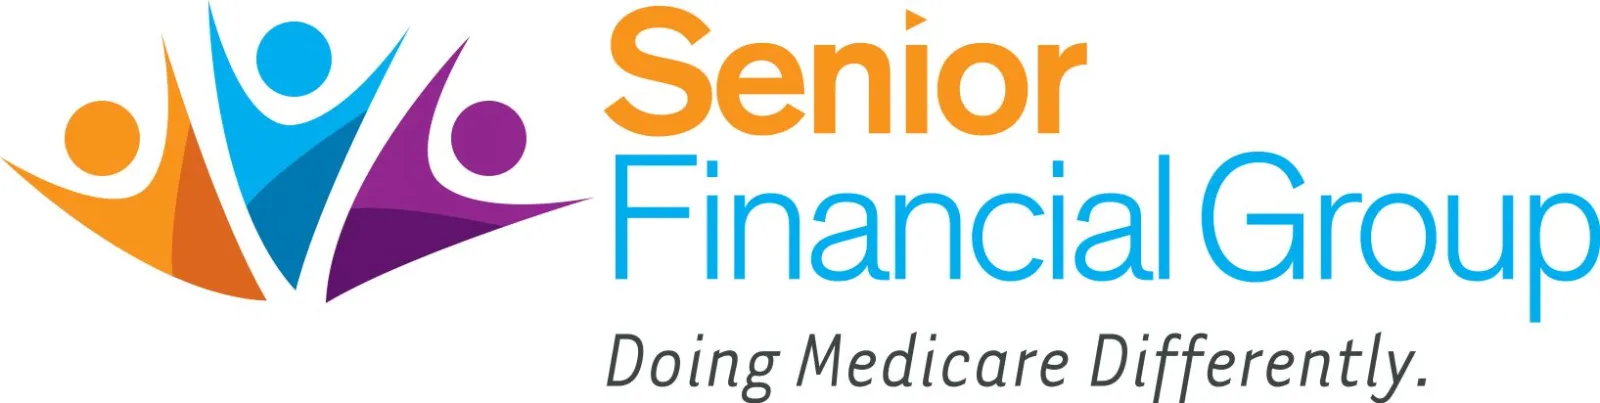 senior financial group